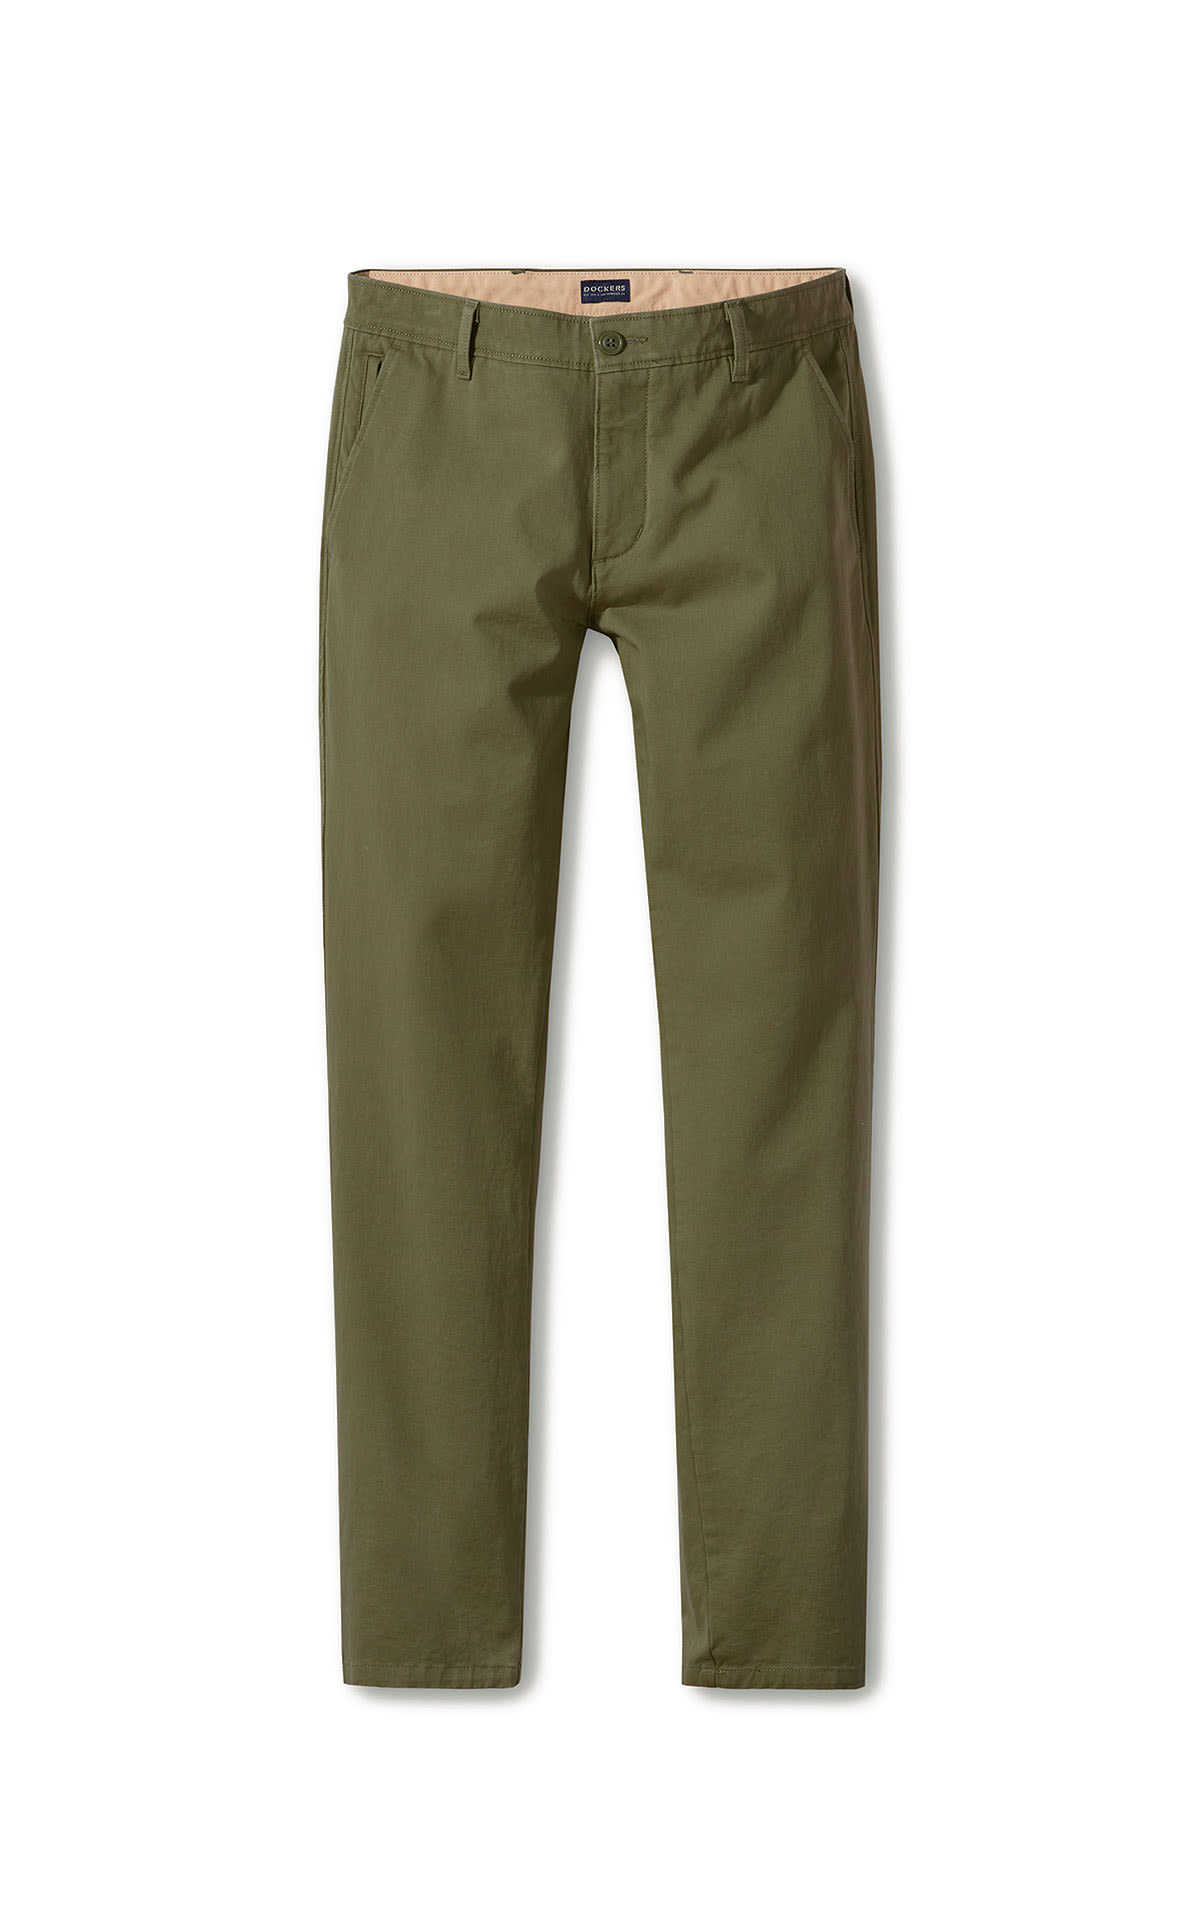 Khaki green skinny pants Dockers